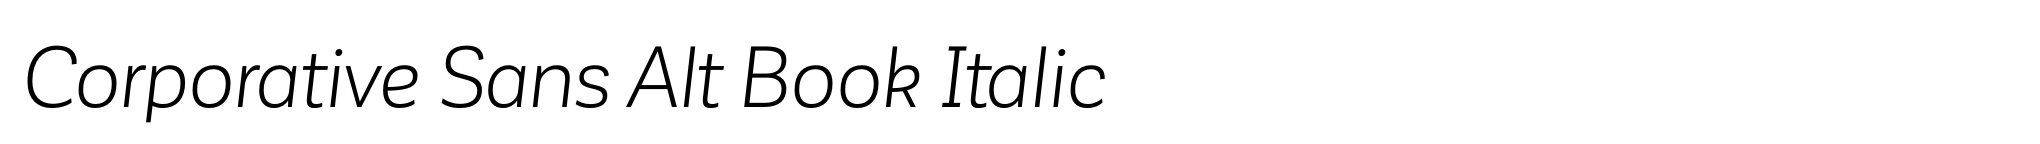 Corporative Sans Alt Book Italic image